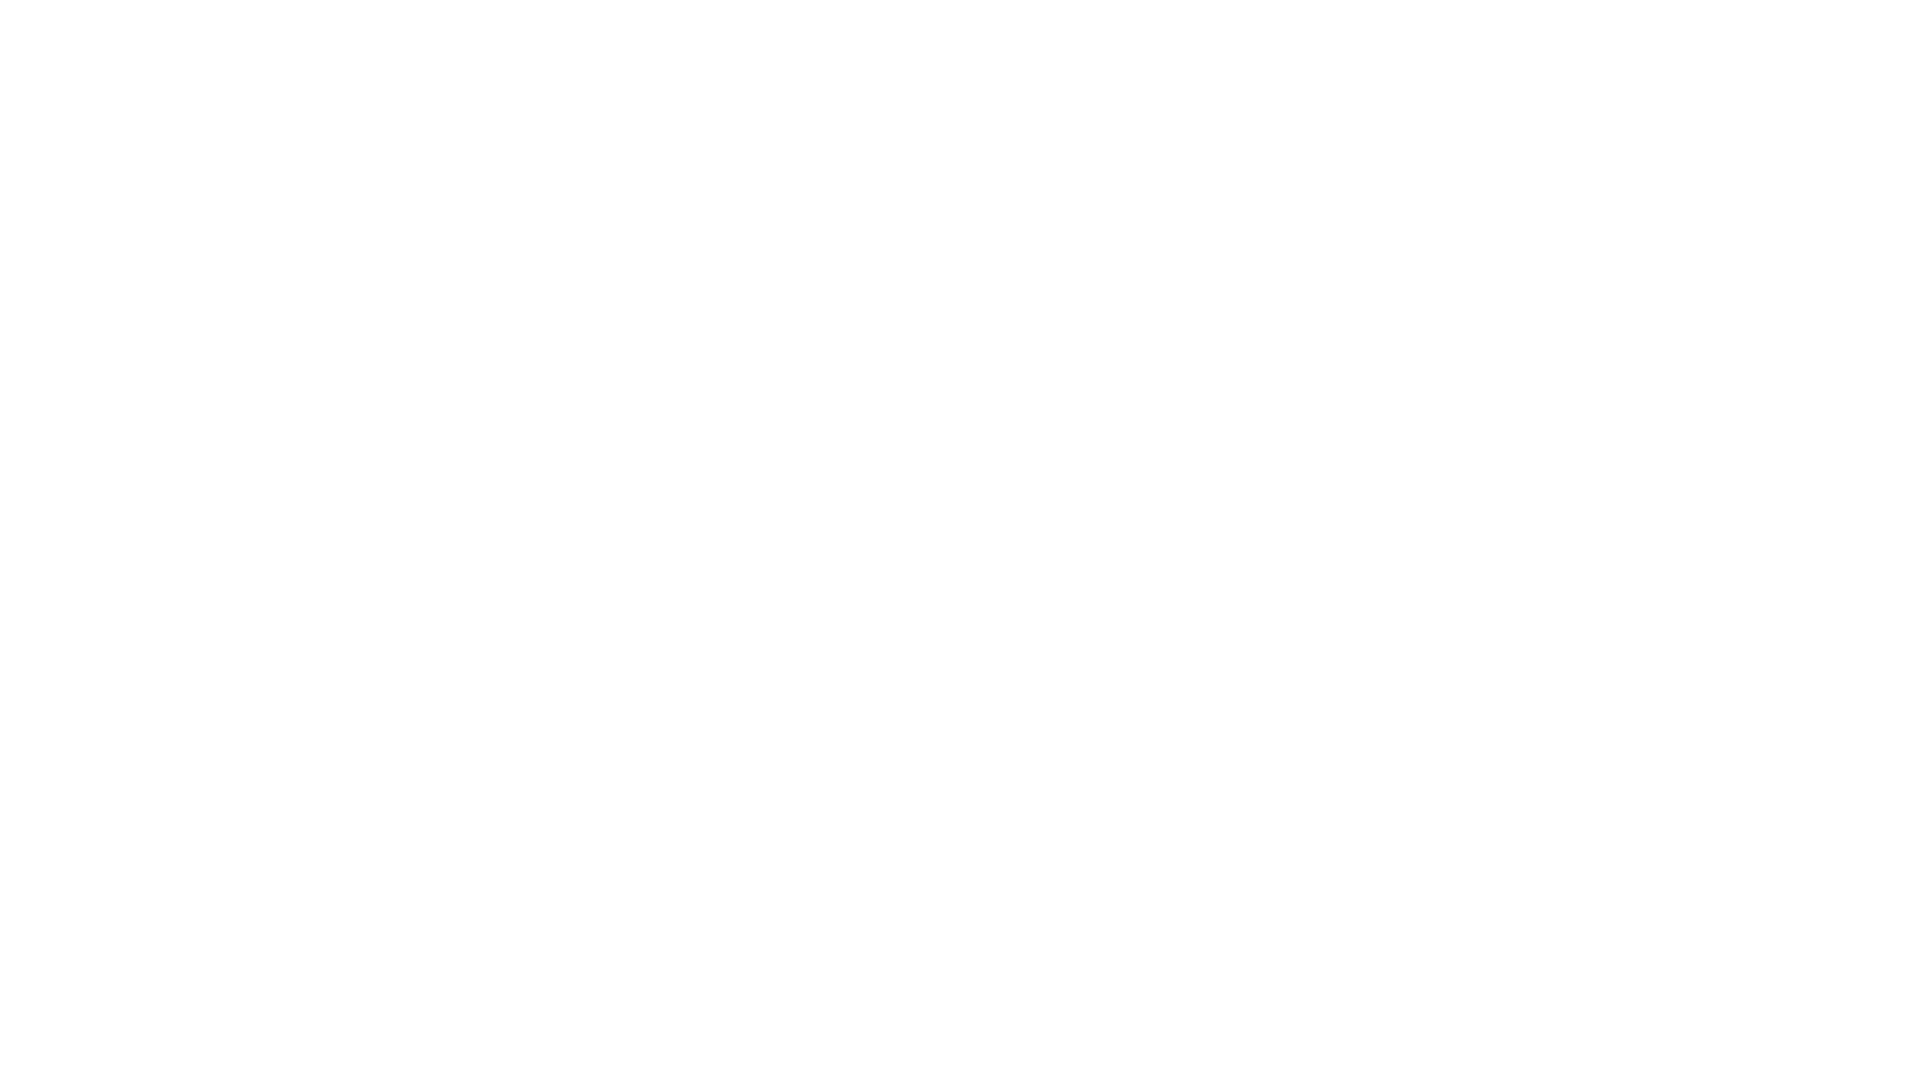 Massive Entertainment - A Ubisoft studio